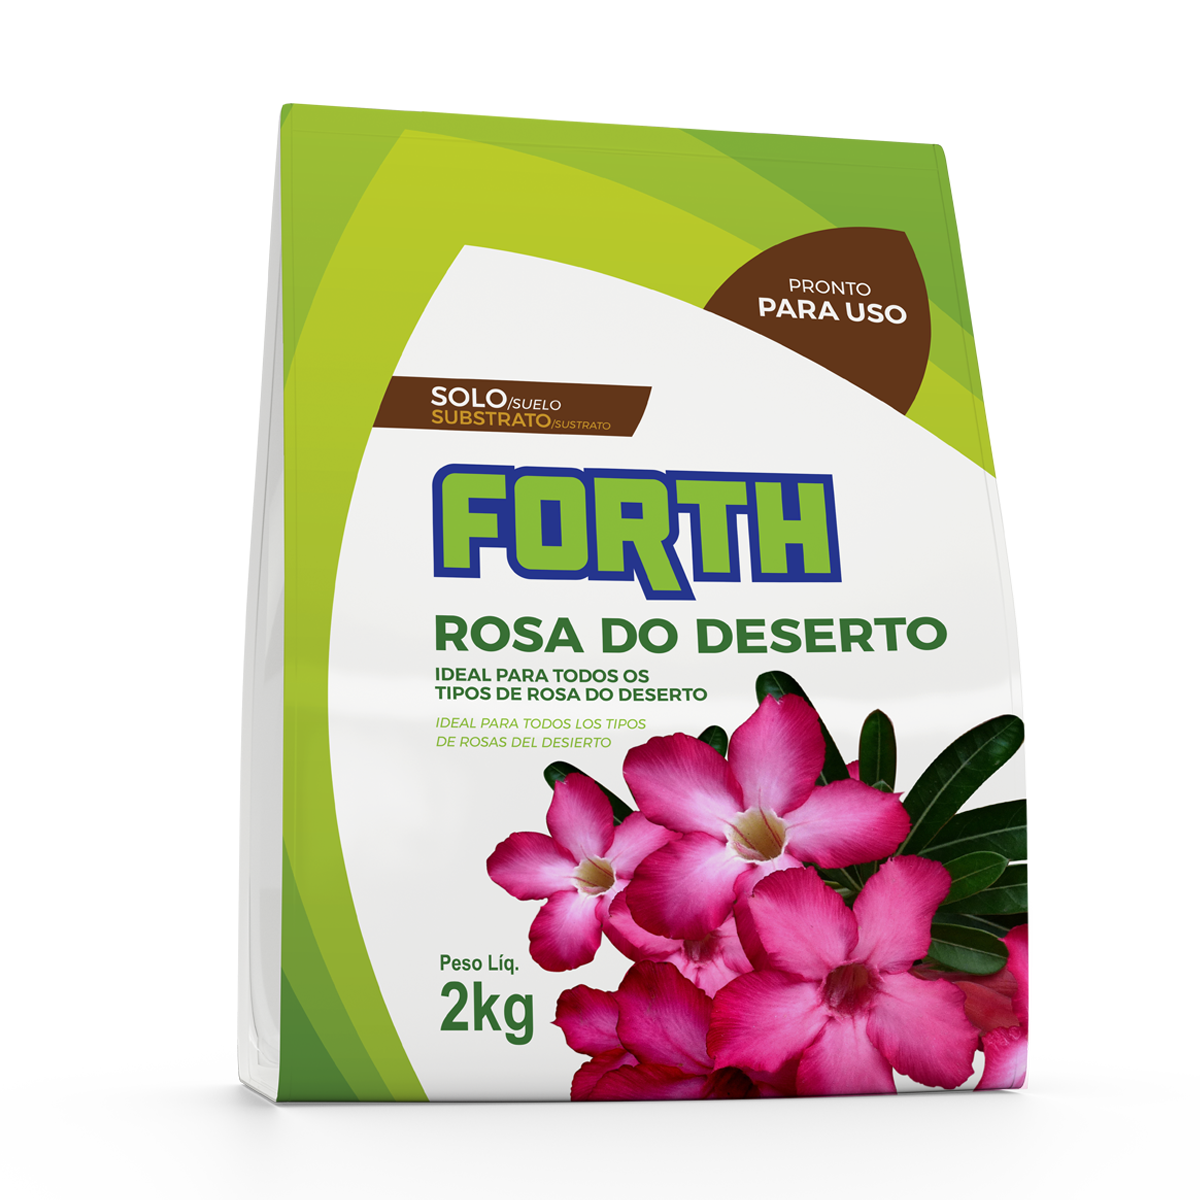 FORTH Substrato Rosa do Deserto 2kg - Loja Sato